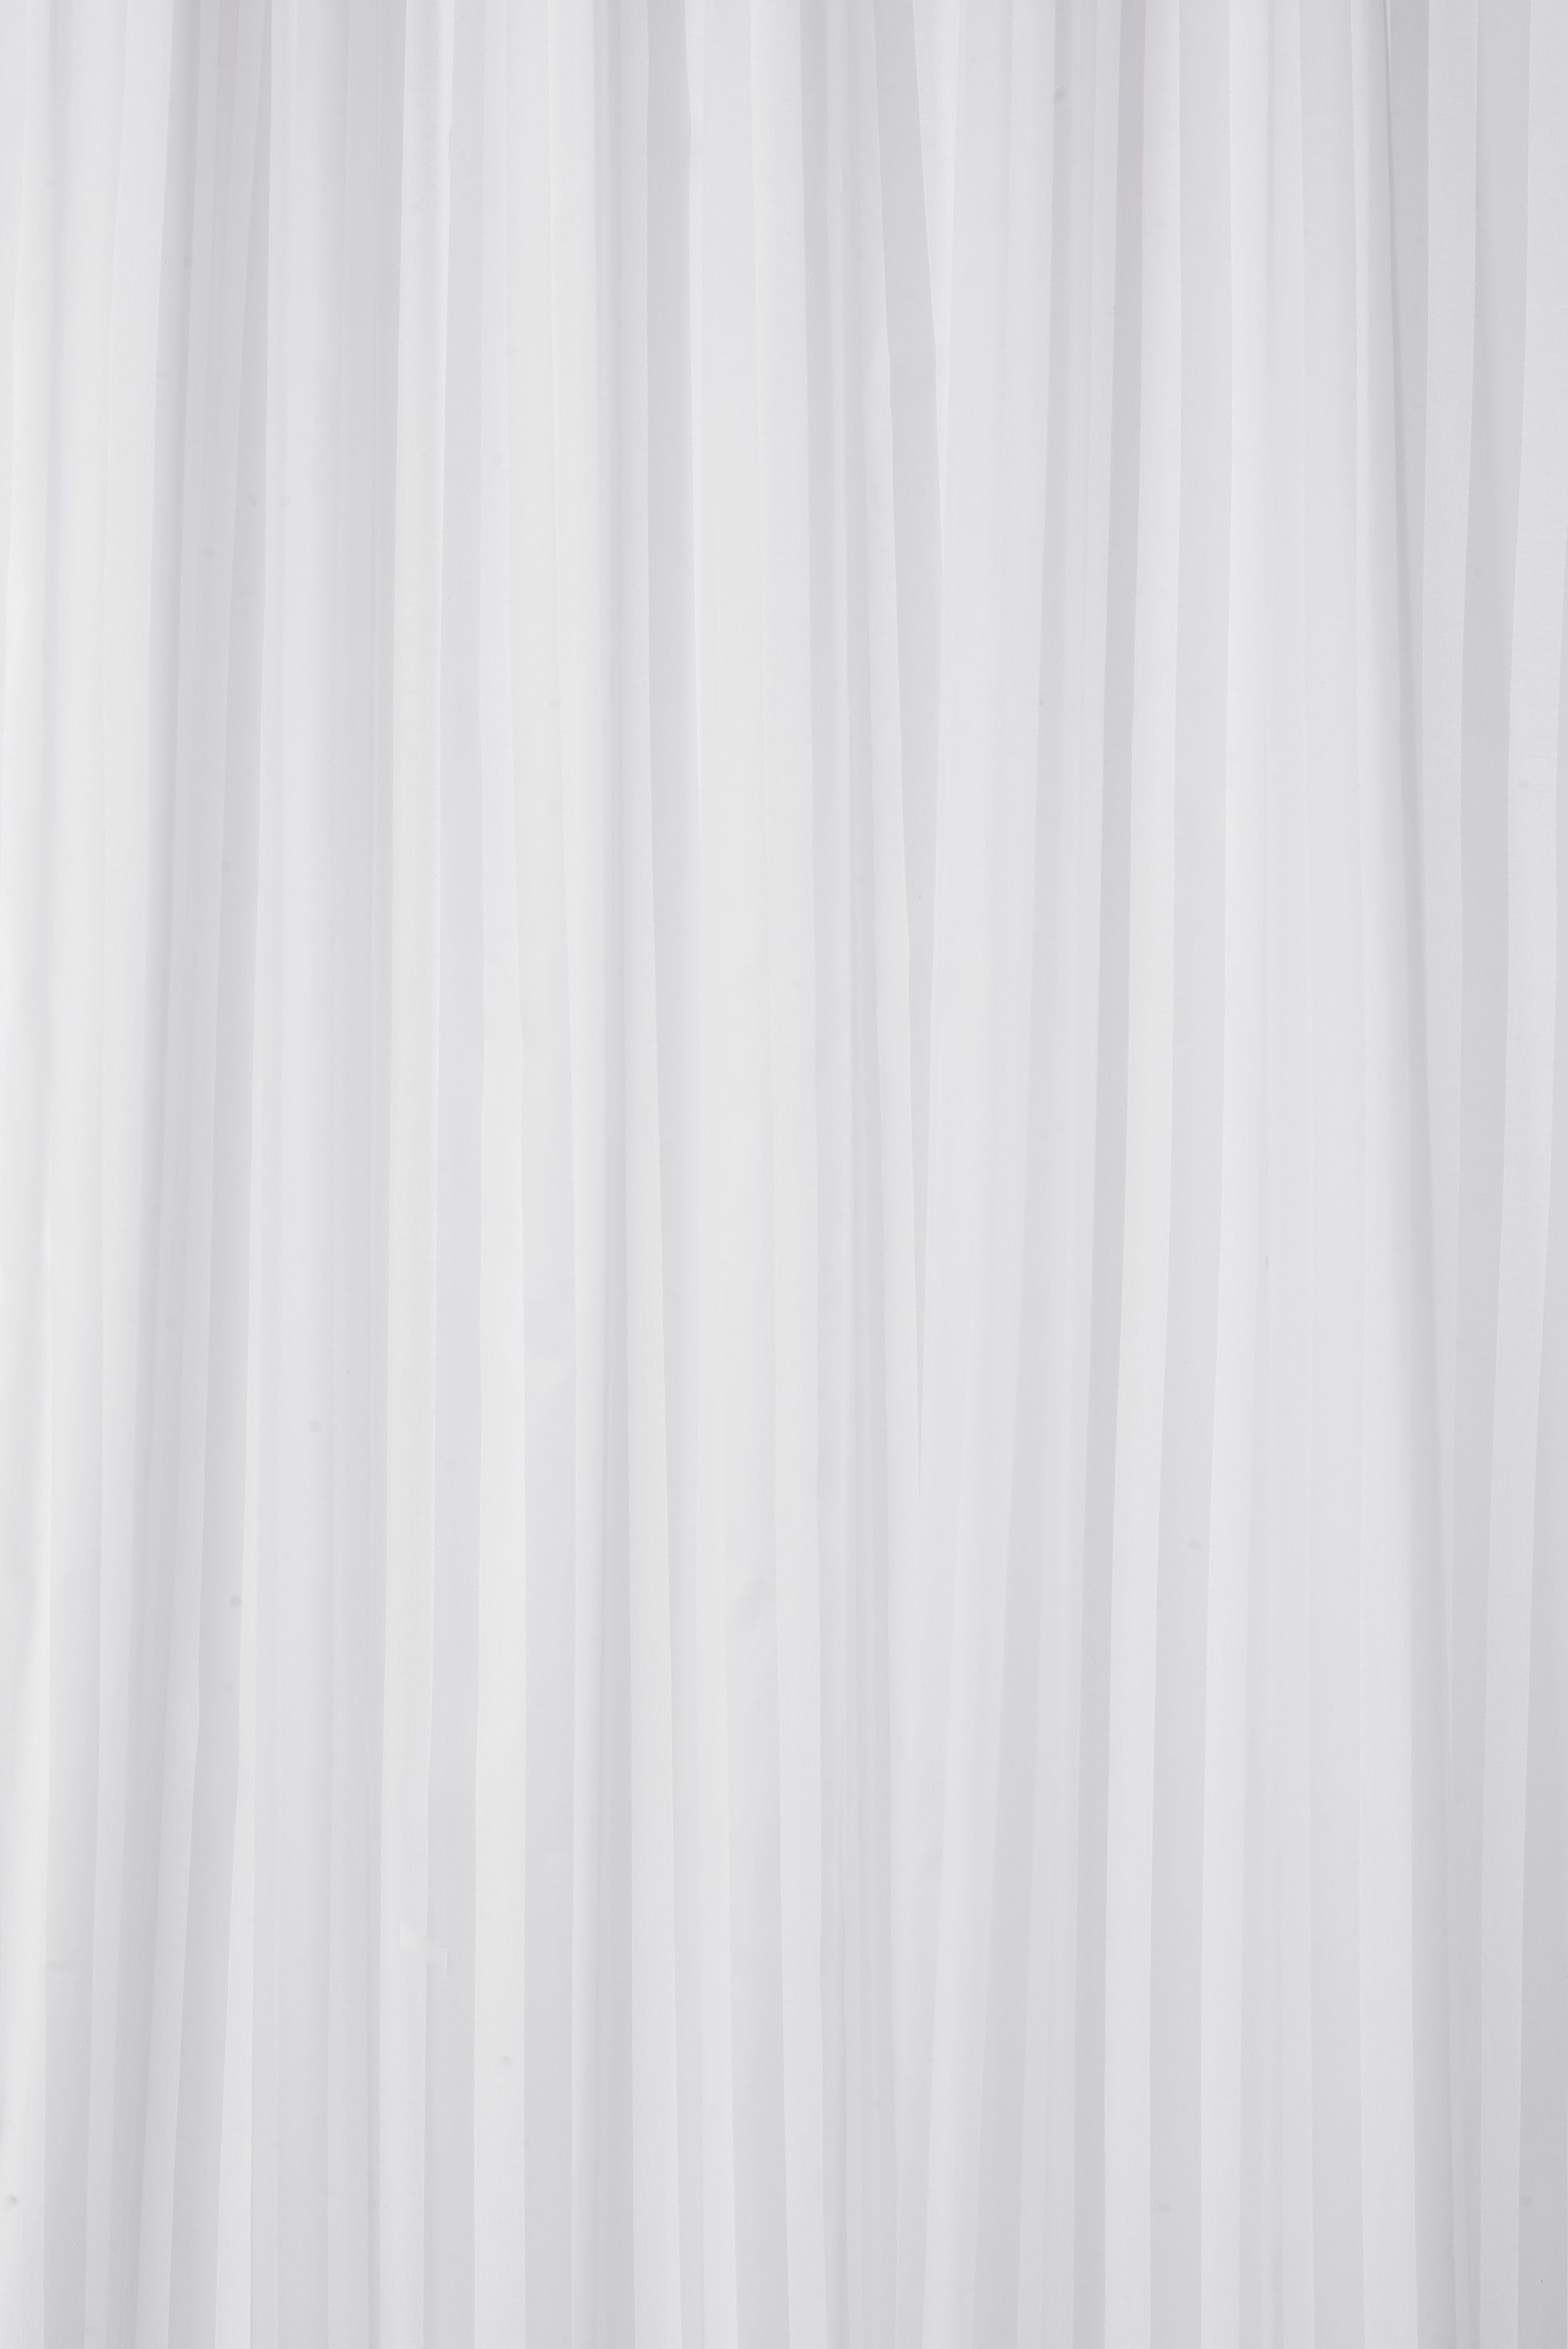 Image of Croydex Woven Stripe Bathroom Shower Curtain - White